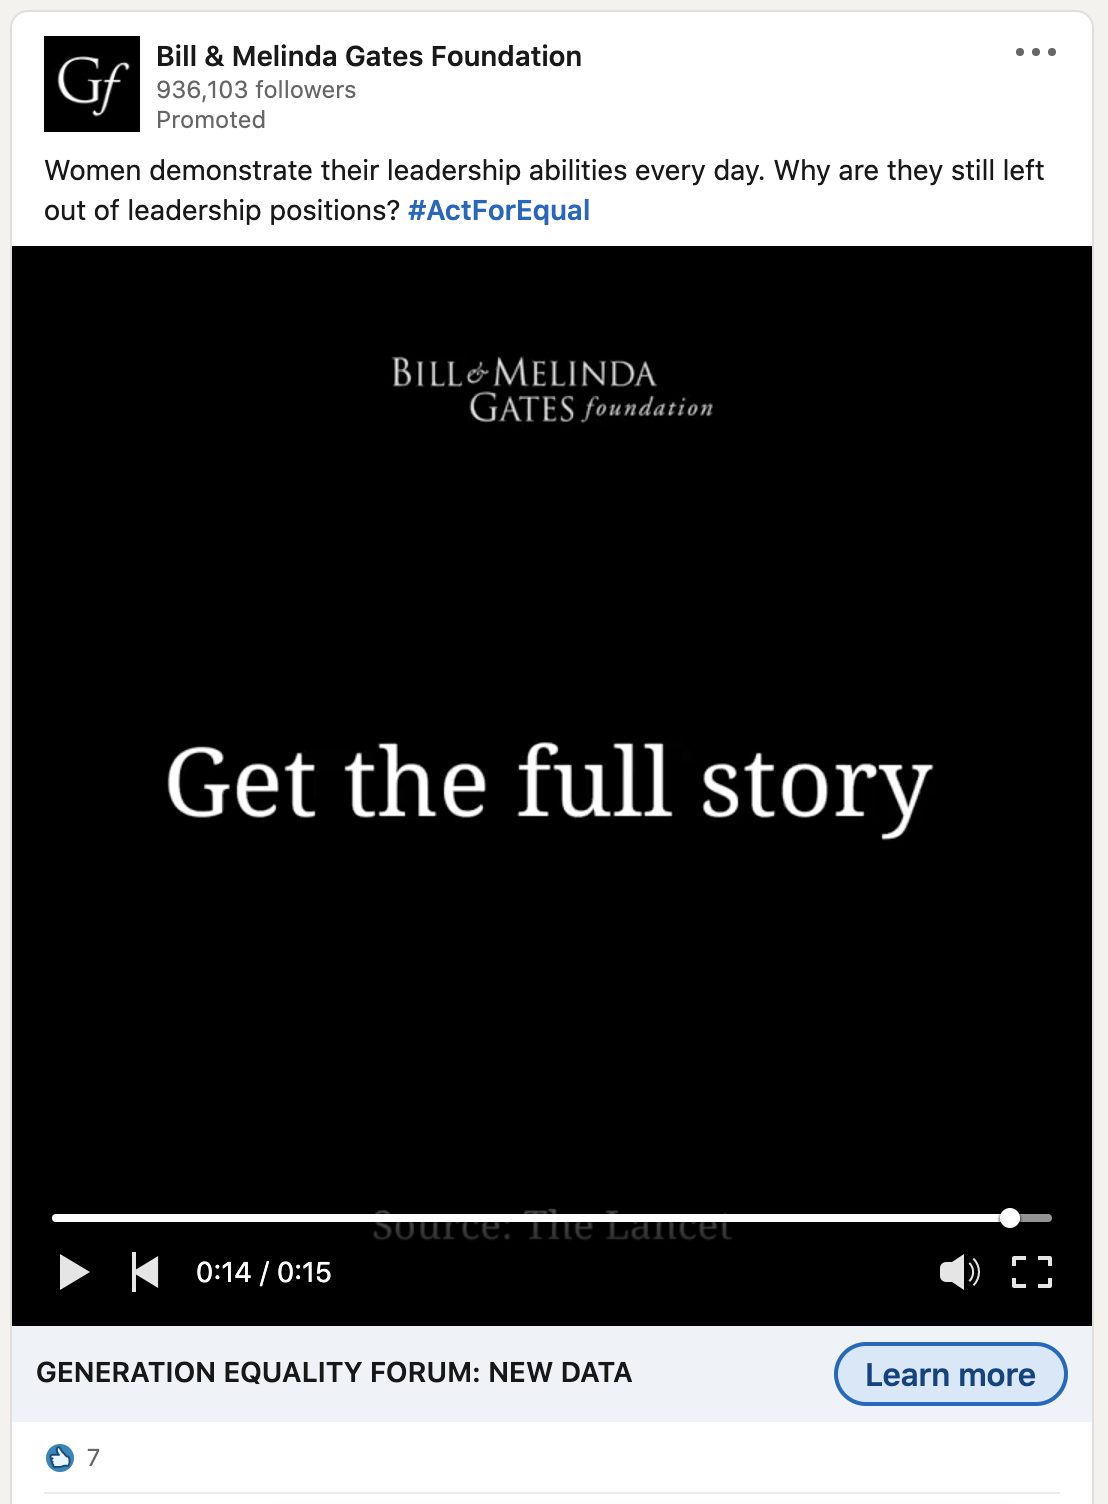 LinkedIn video ad example from Bill & Melinda Gates Foundation